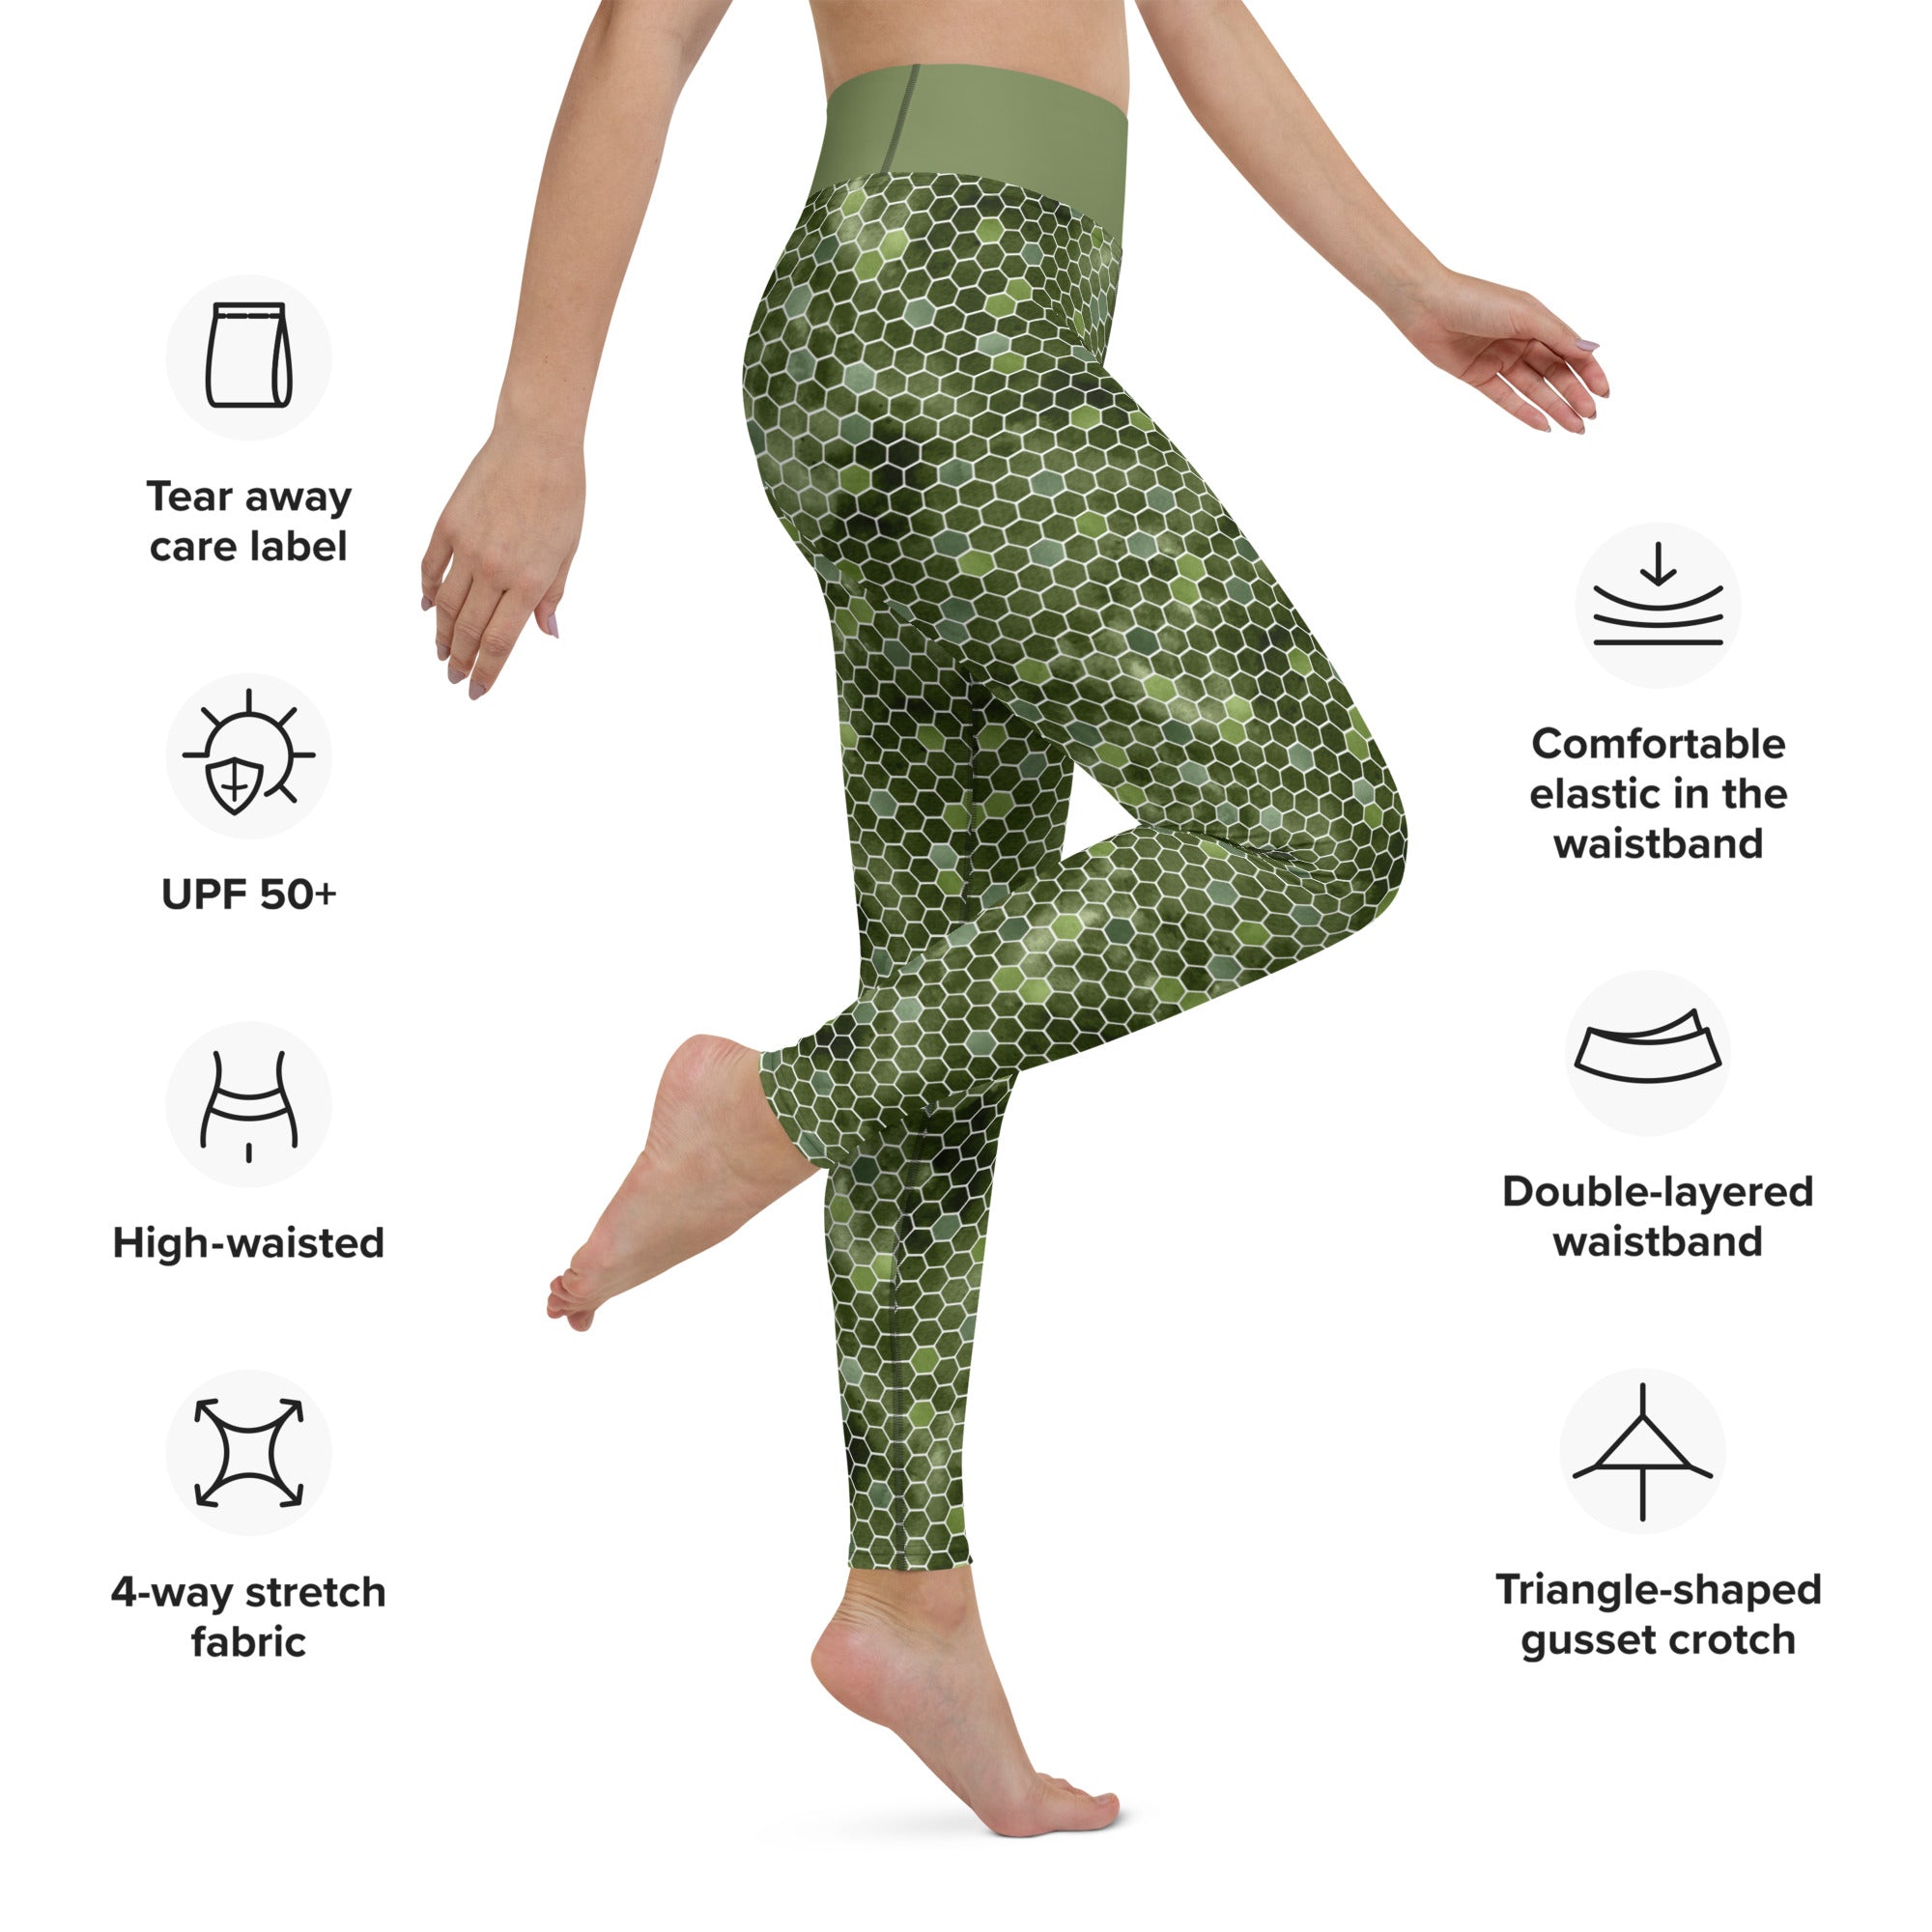 Yoga Leggings- Honeycomb Green